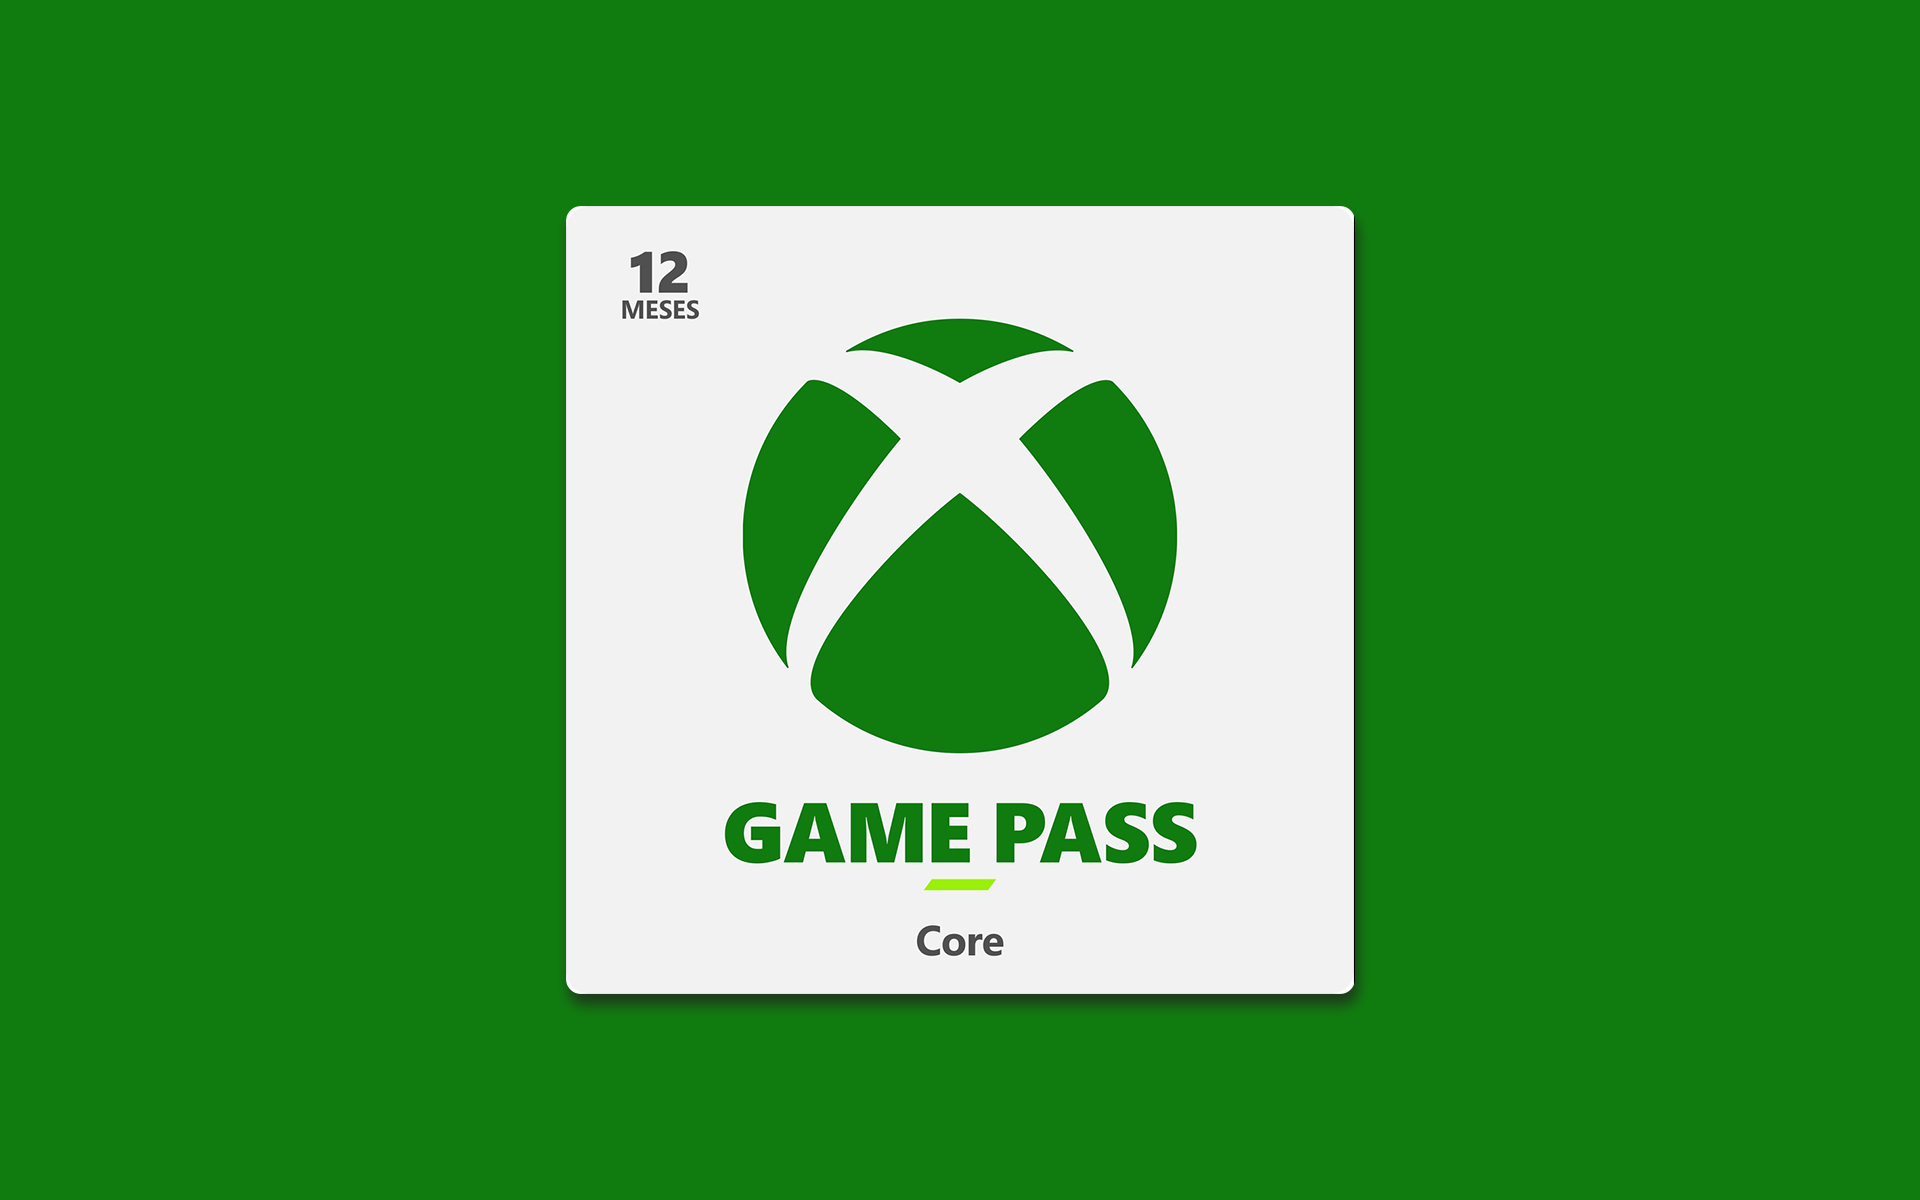 Assinatura 12 meses de Game Pass Core